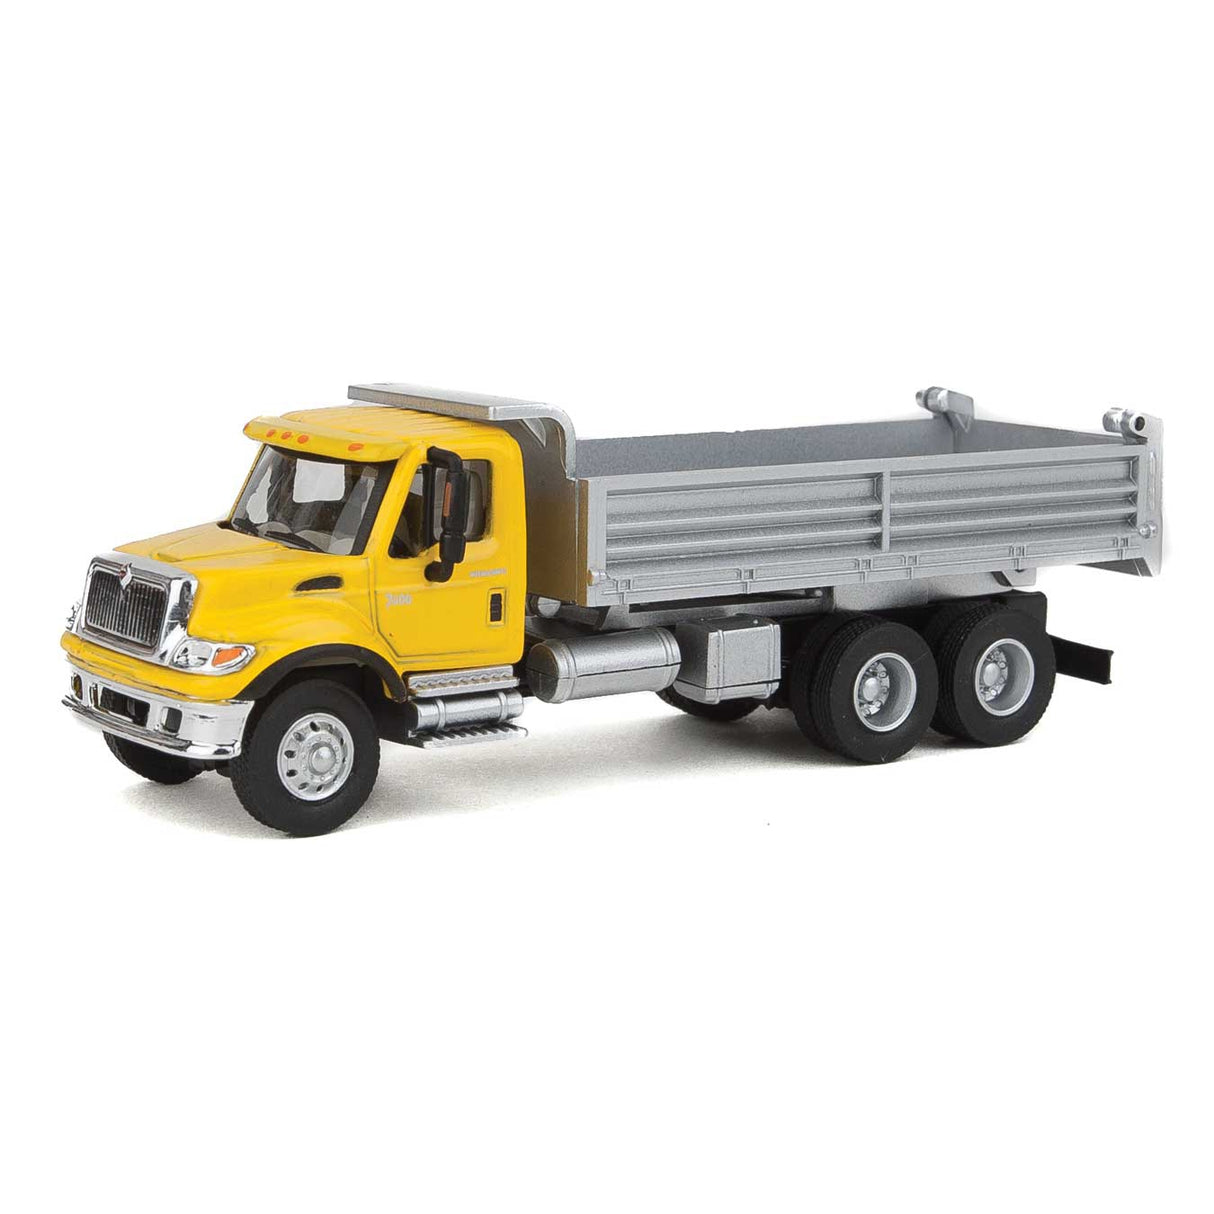 Walthers International(R) 7600 3-Axle Heavy-Duty Dump Truck - Assembled -- Yellow Cab, Silver Dump Body